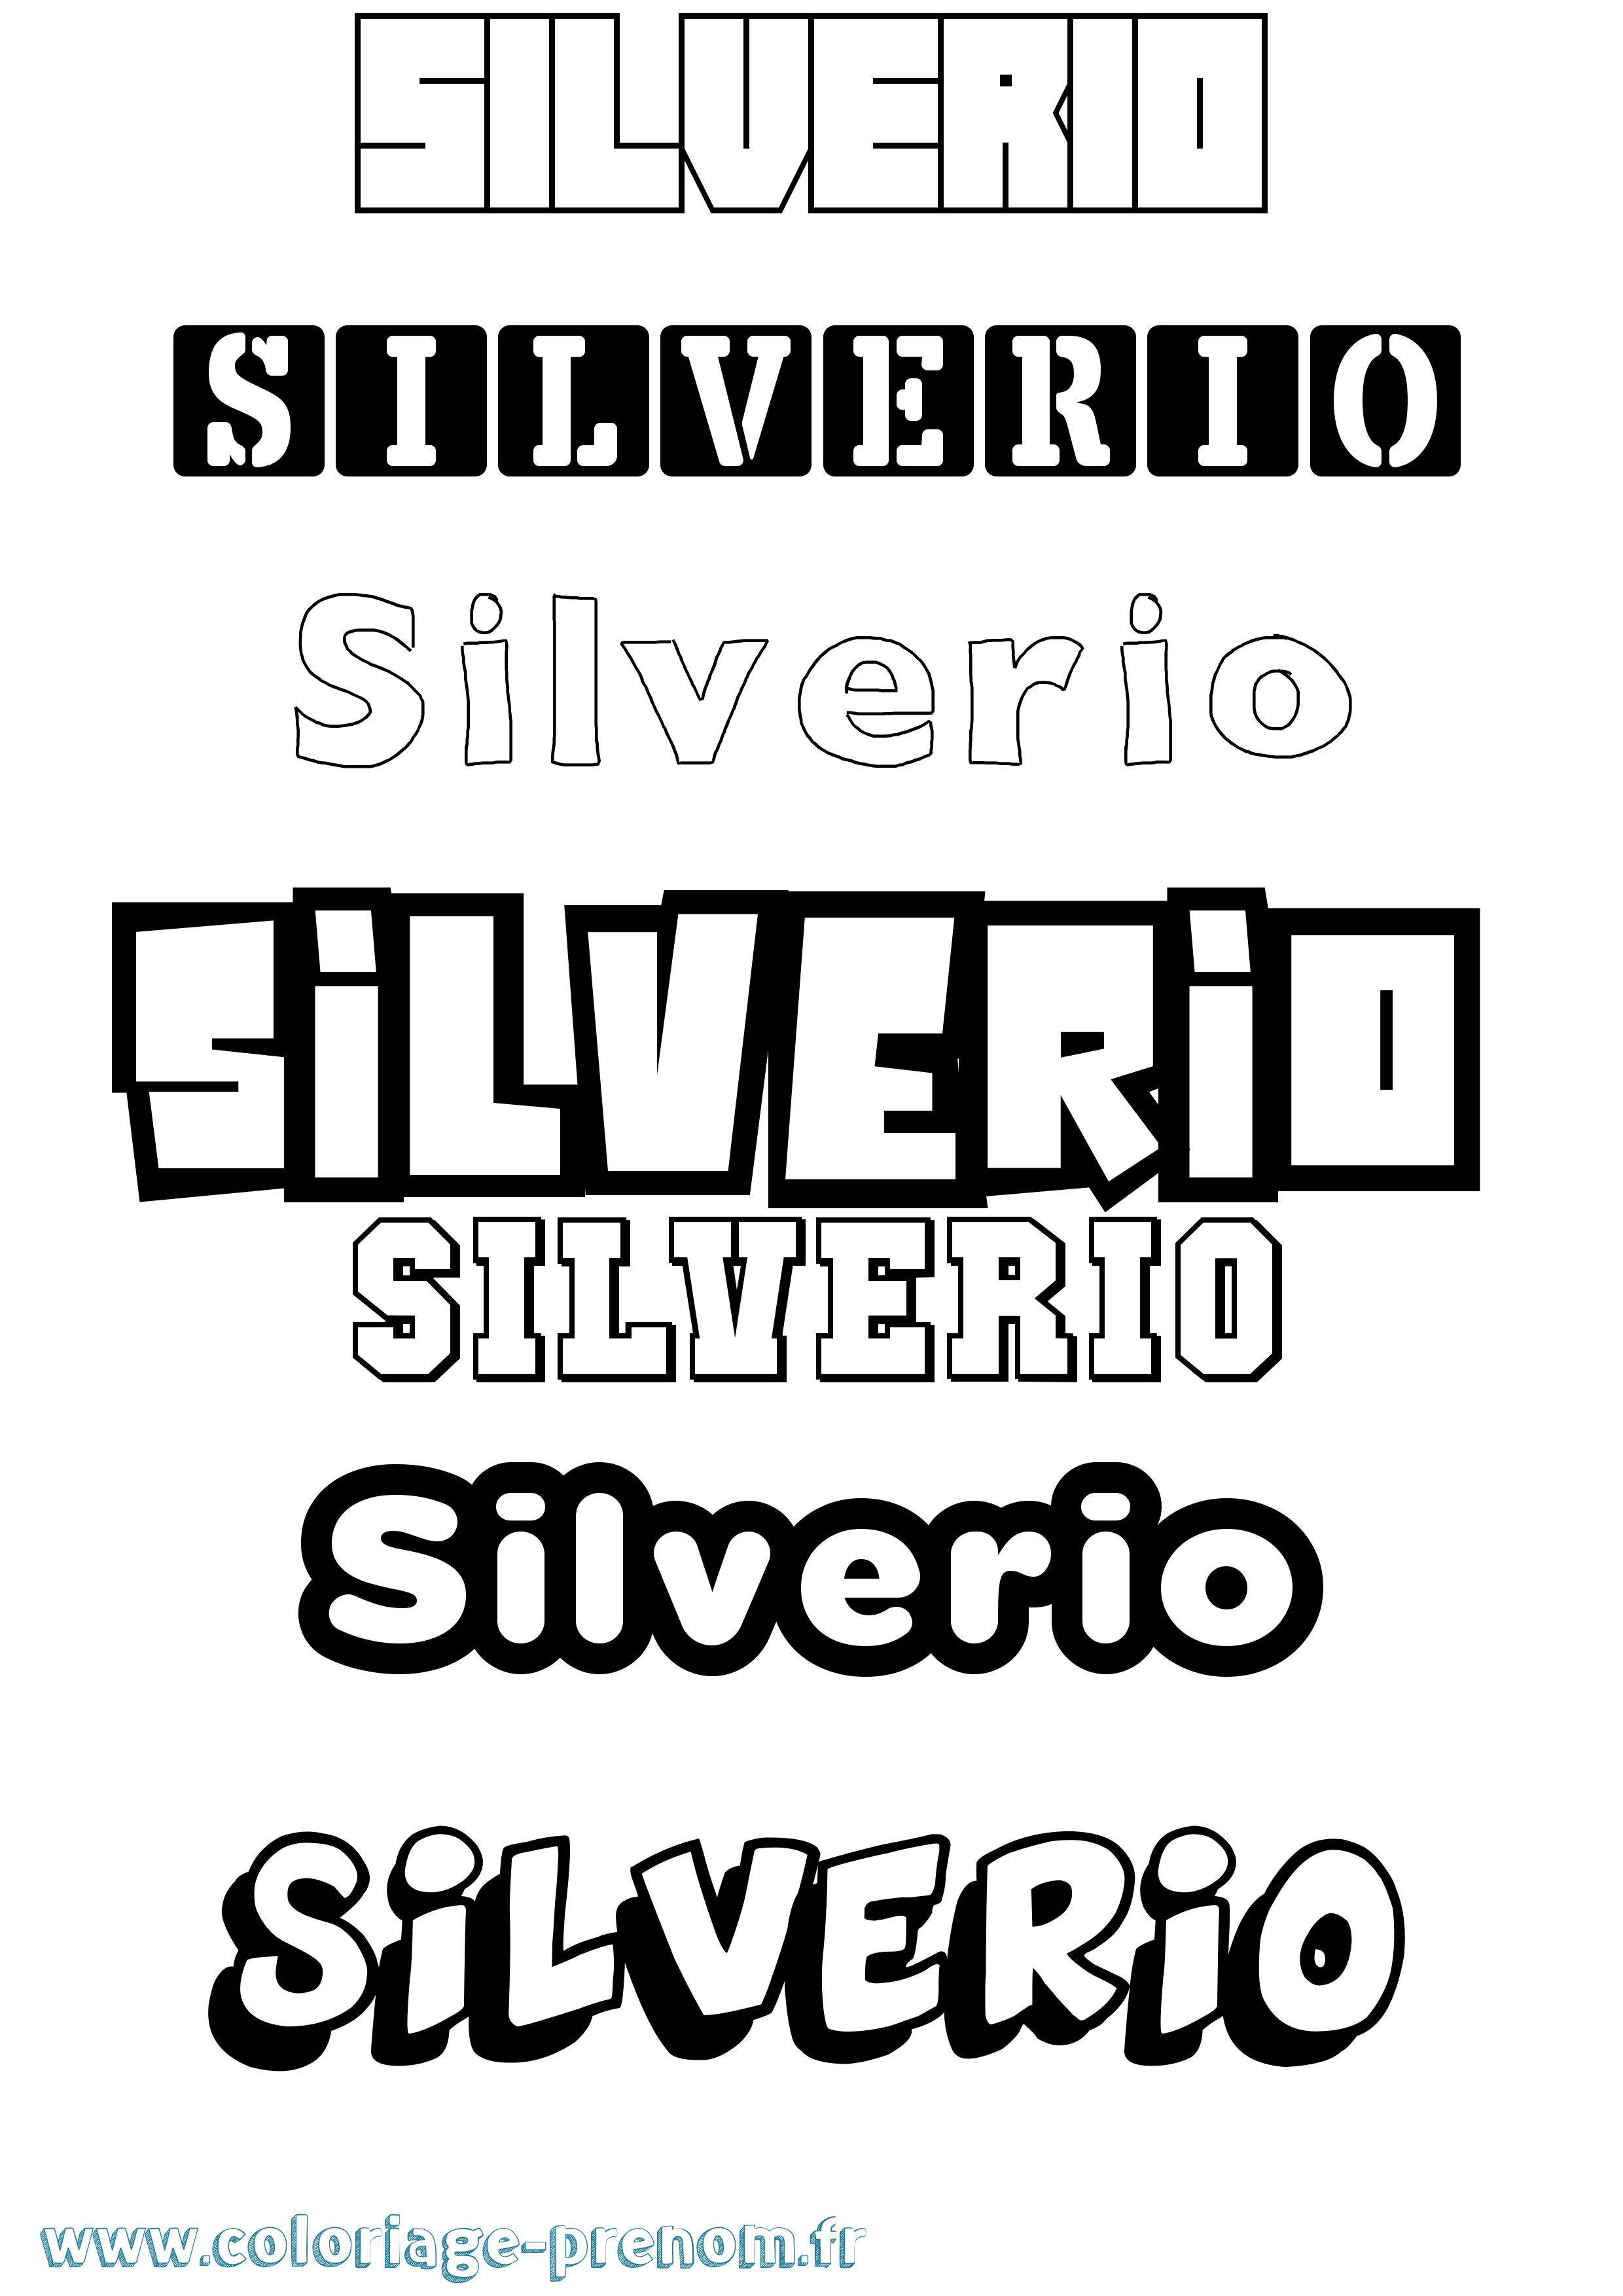 Coloriage prénom Silverio Simple